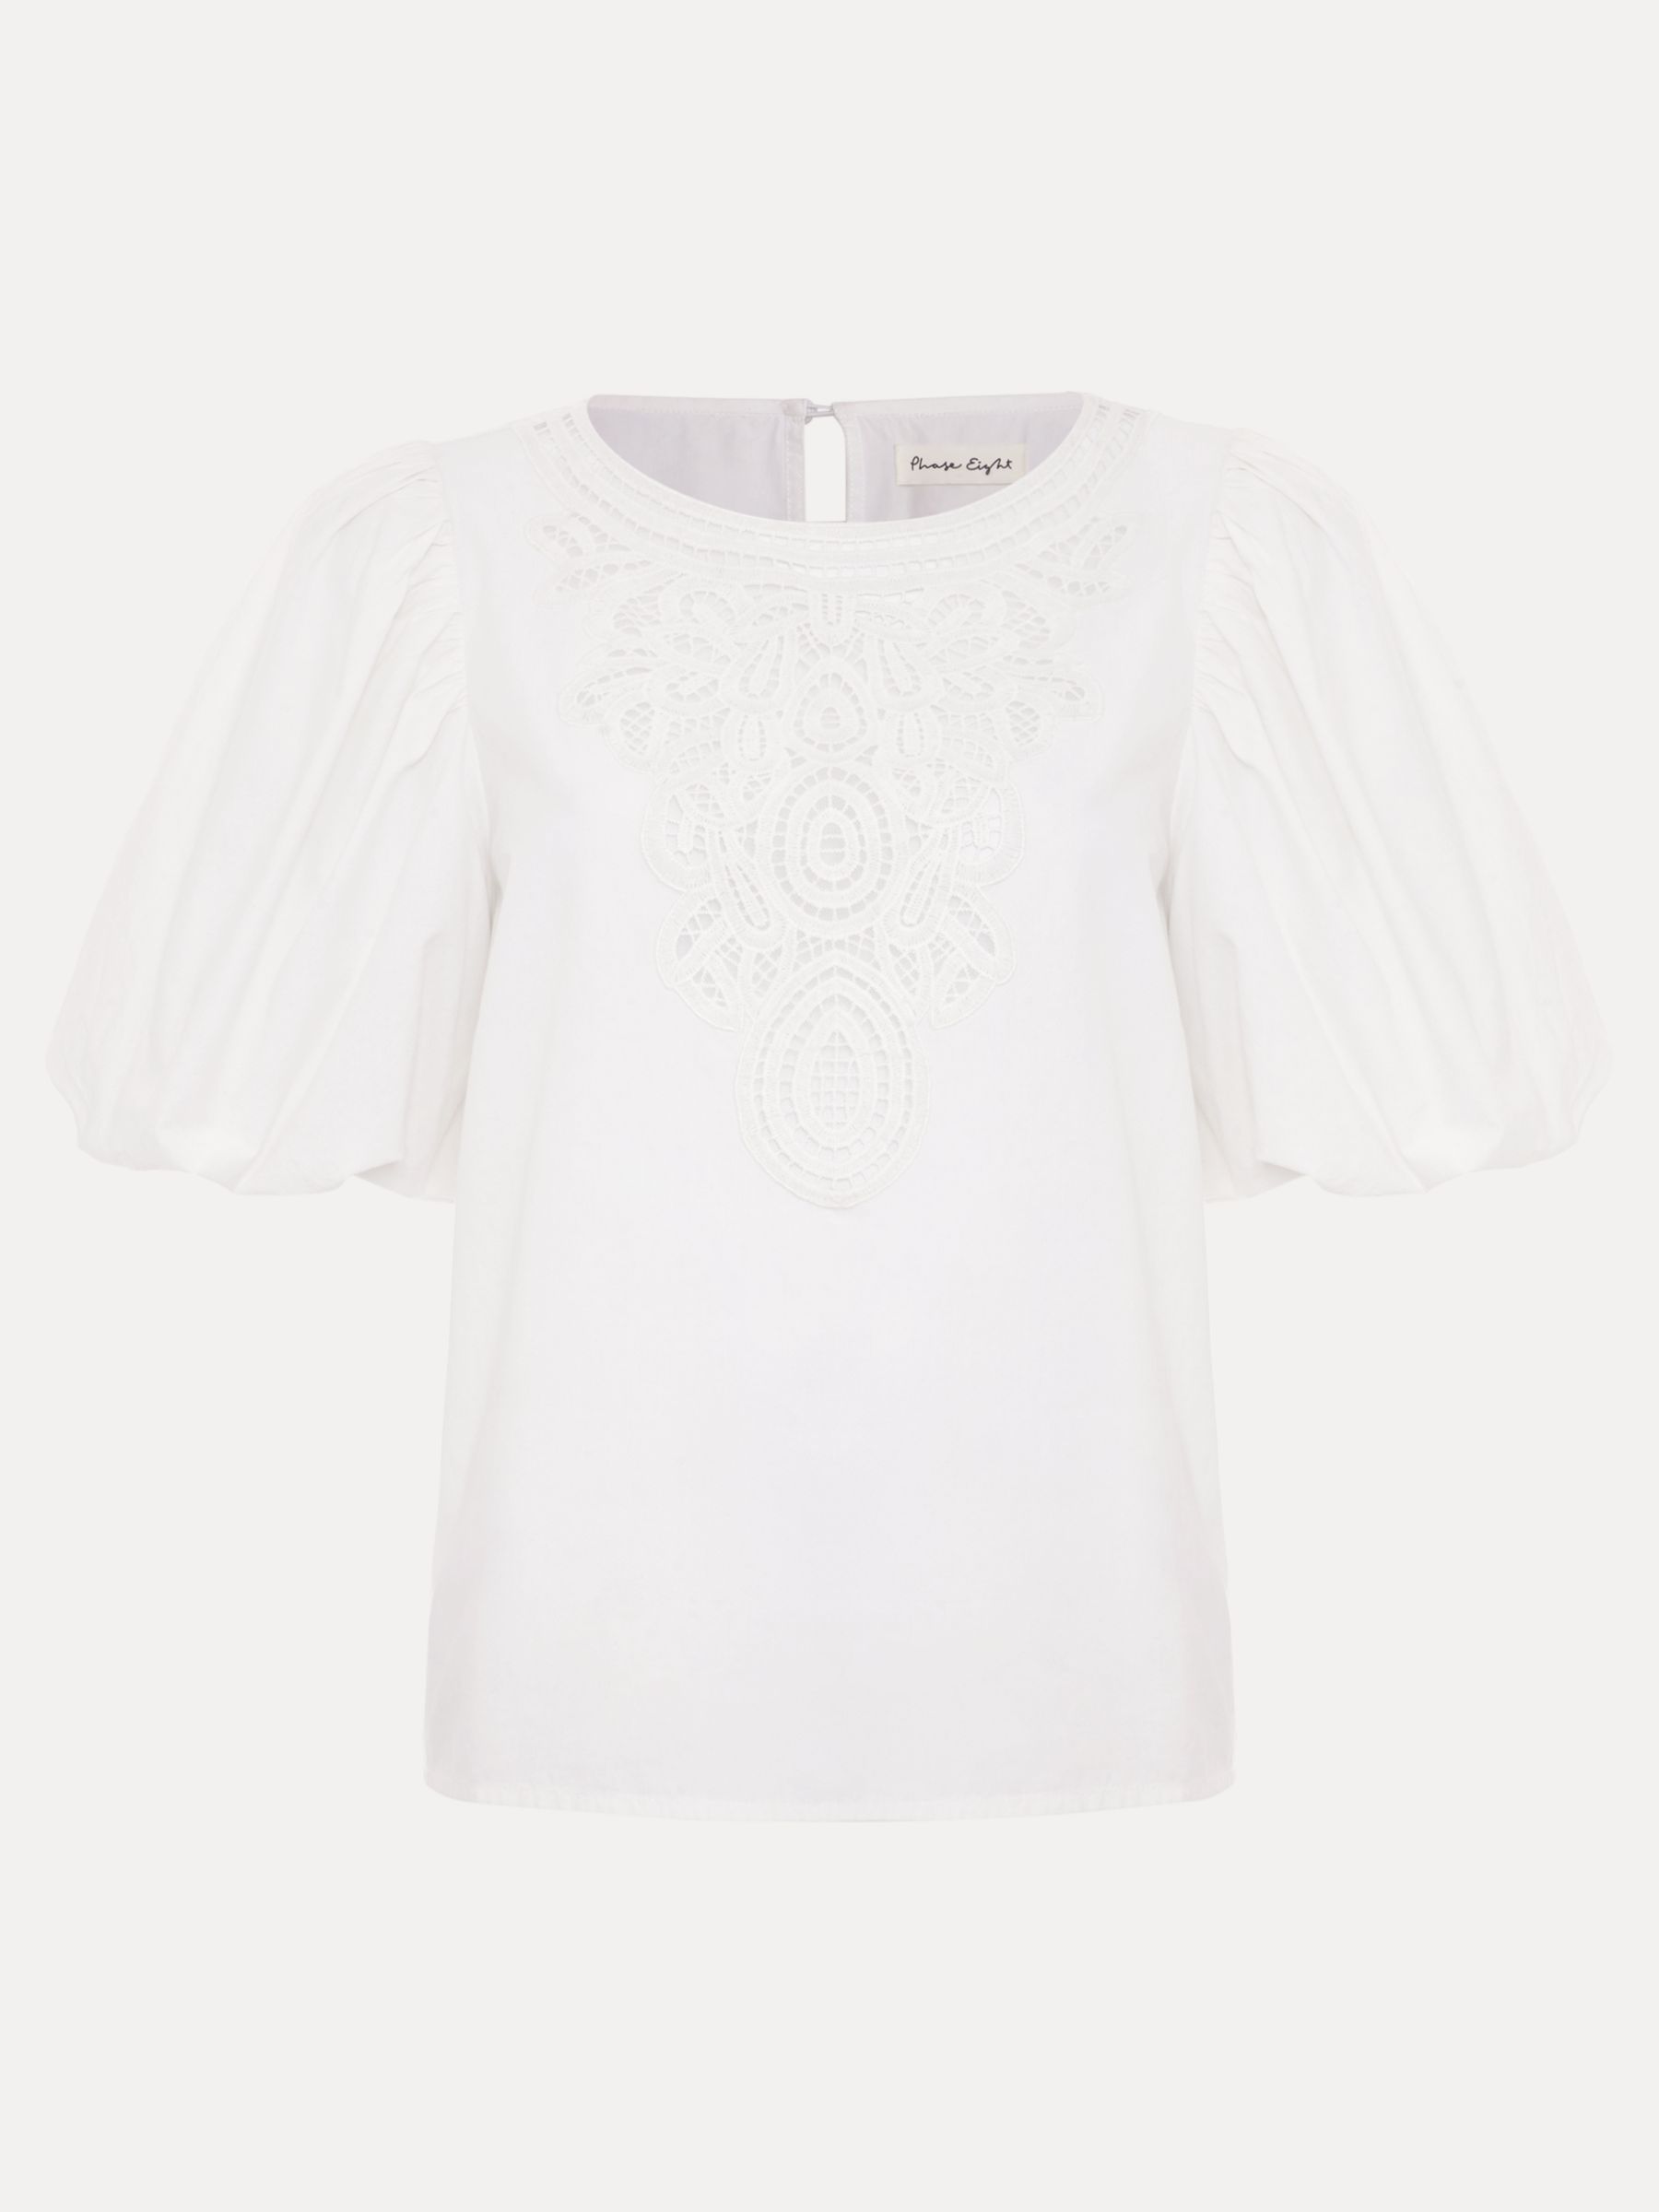 Phase Eight Lillianna Embroidered Cotton Blouse, White, 8